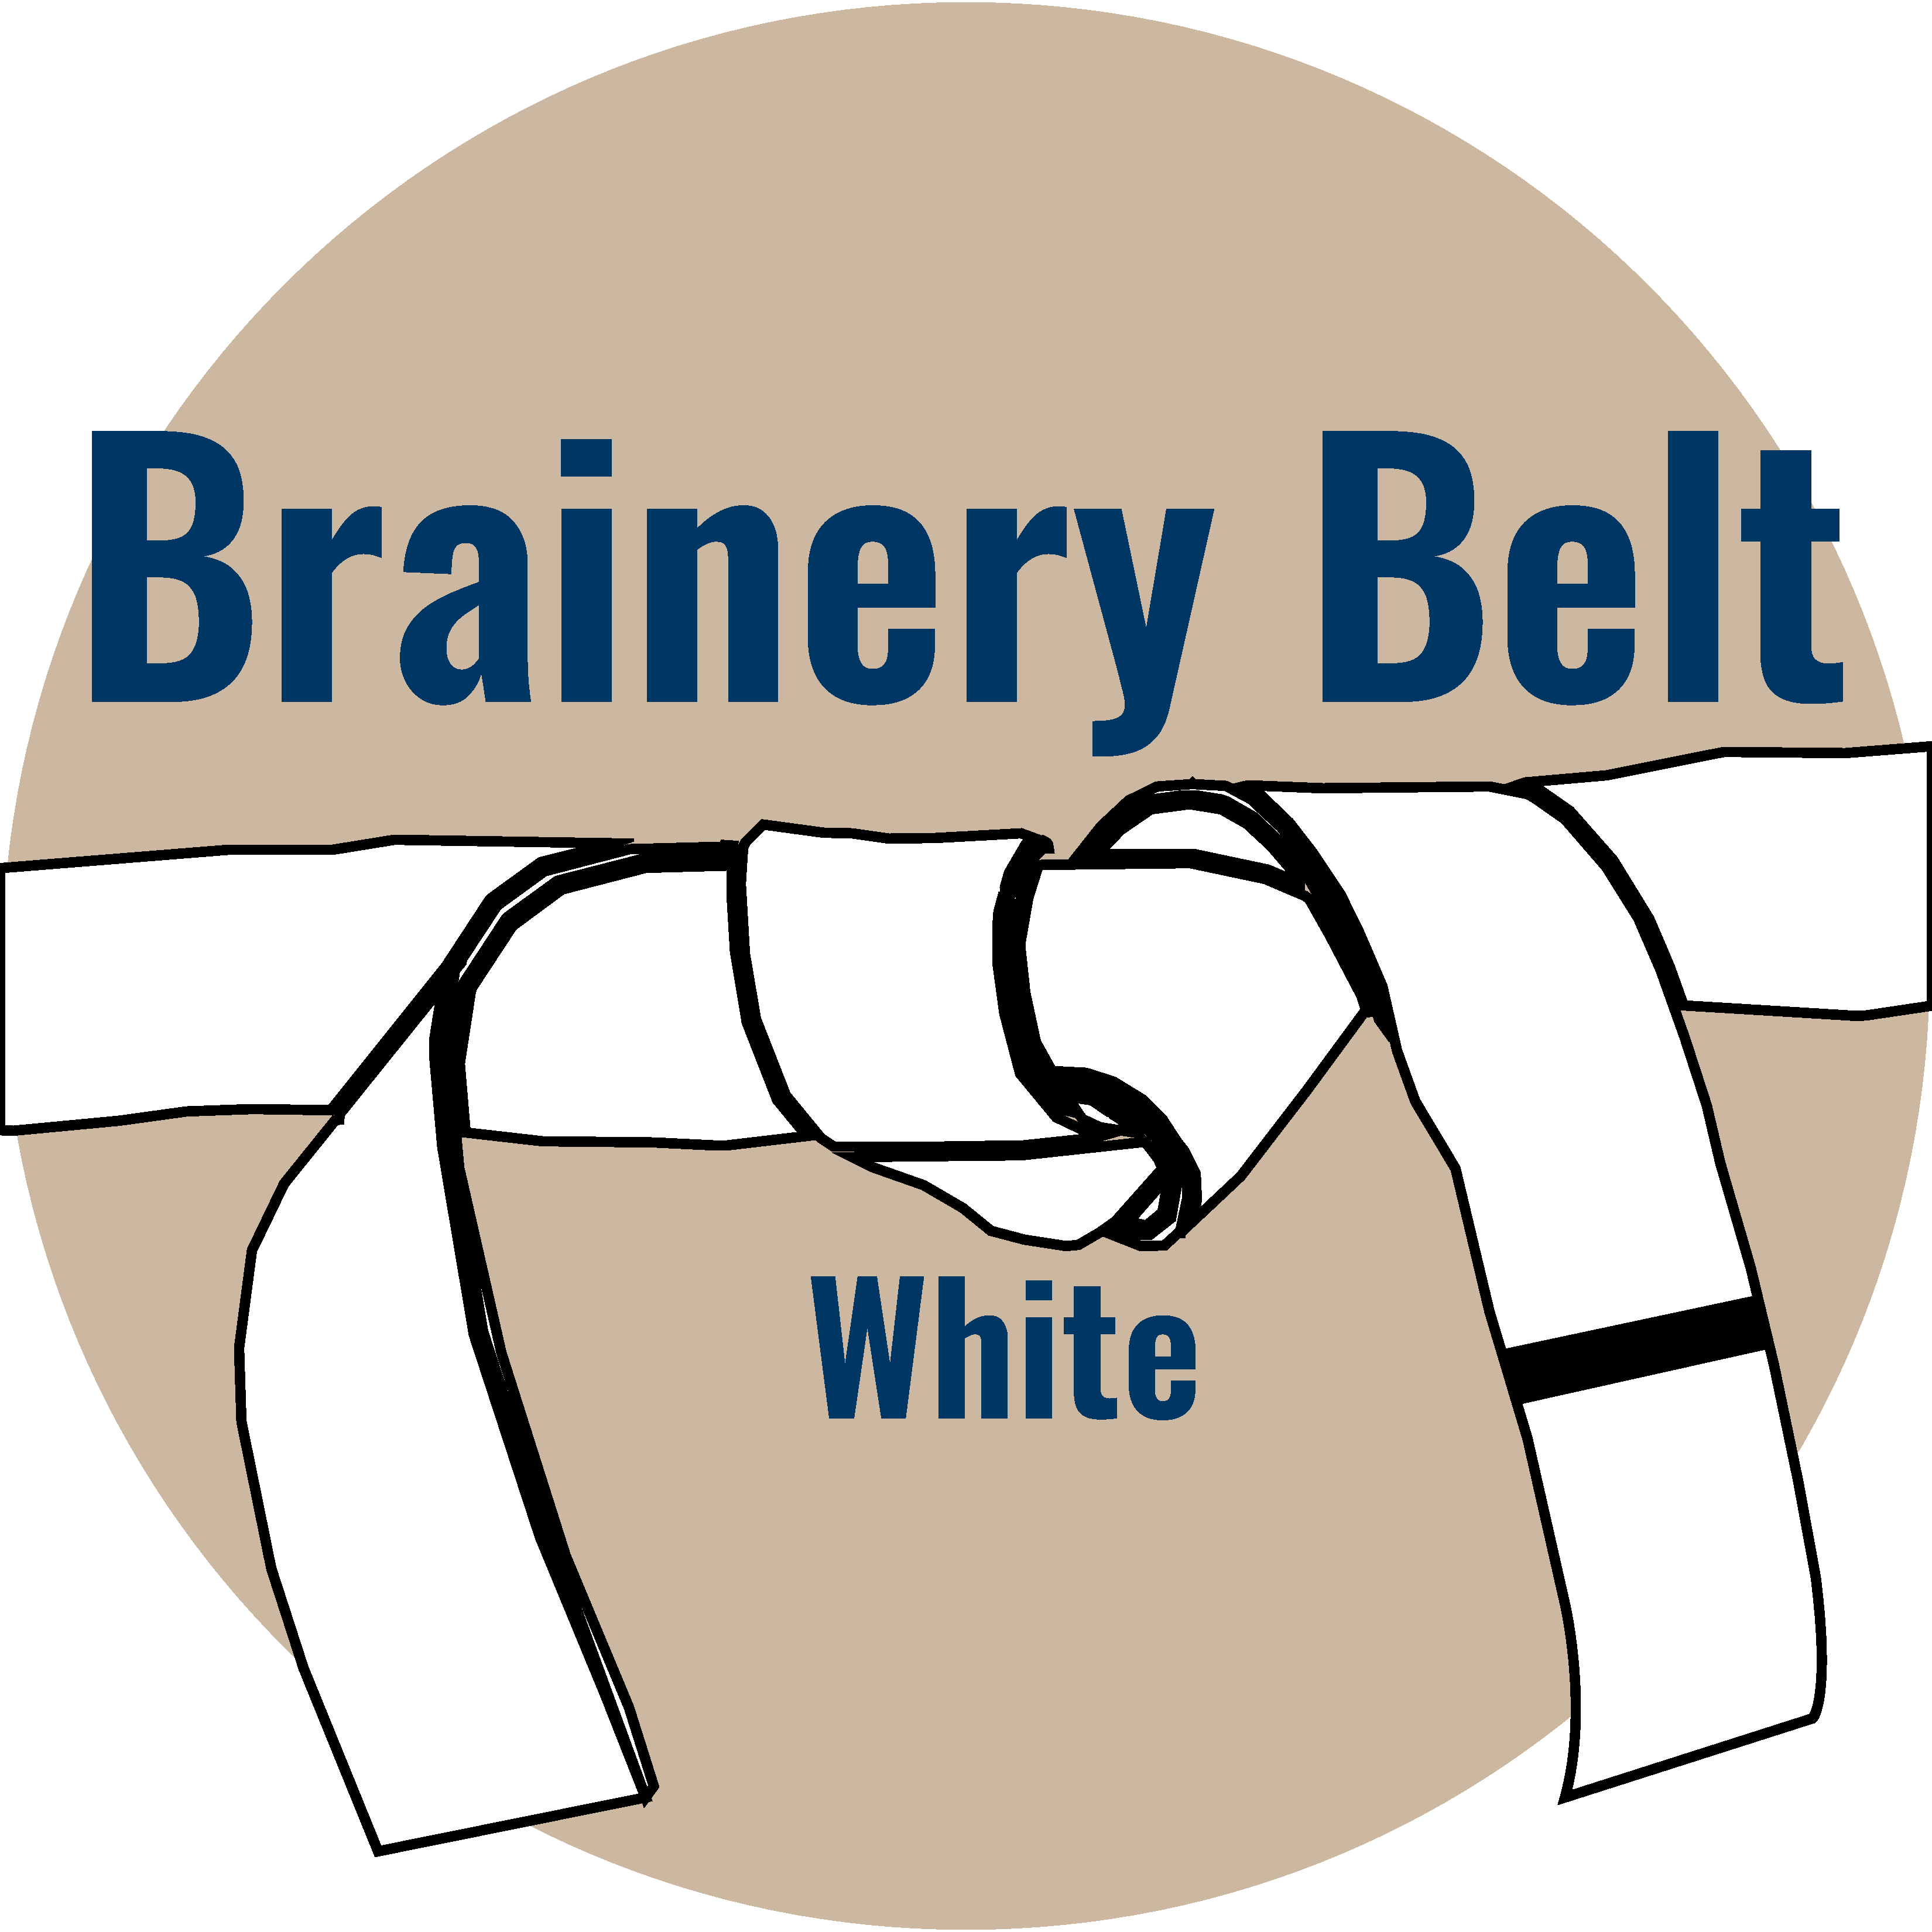 UC2 Brainery White Belt I